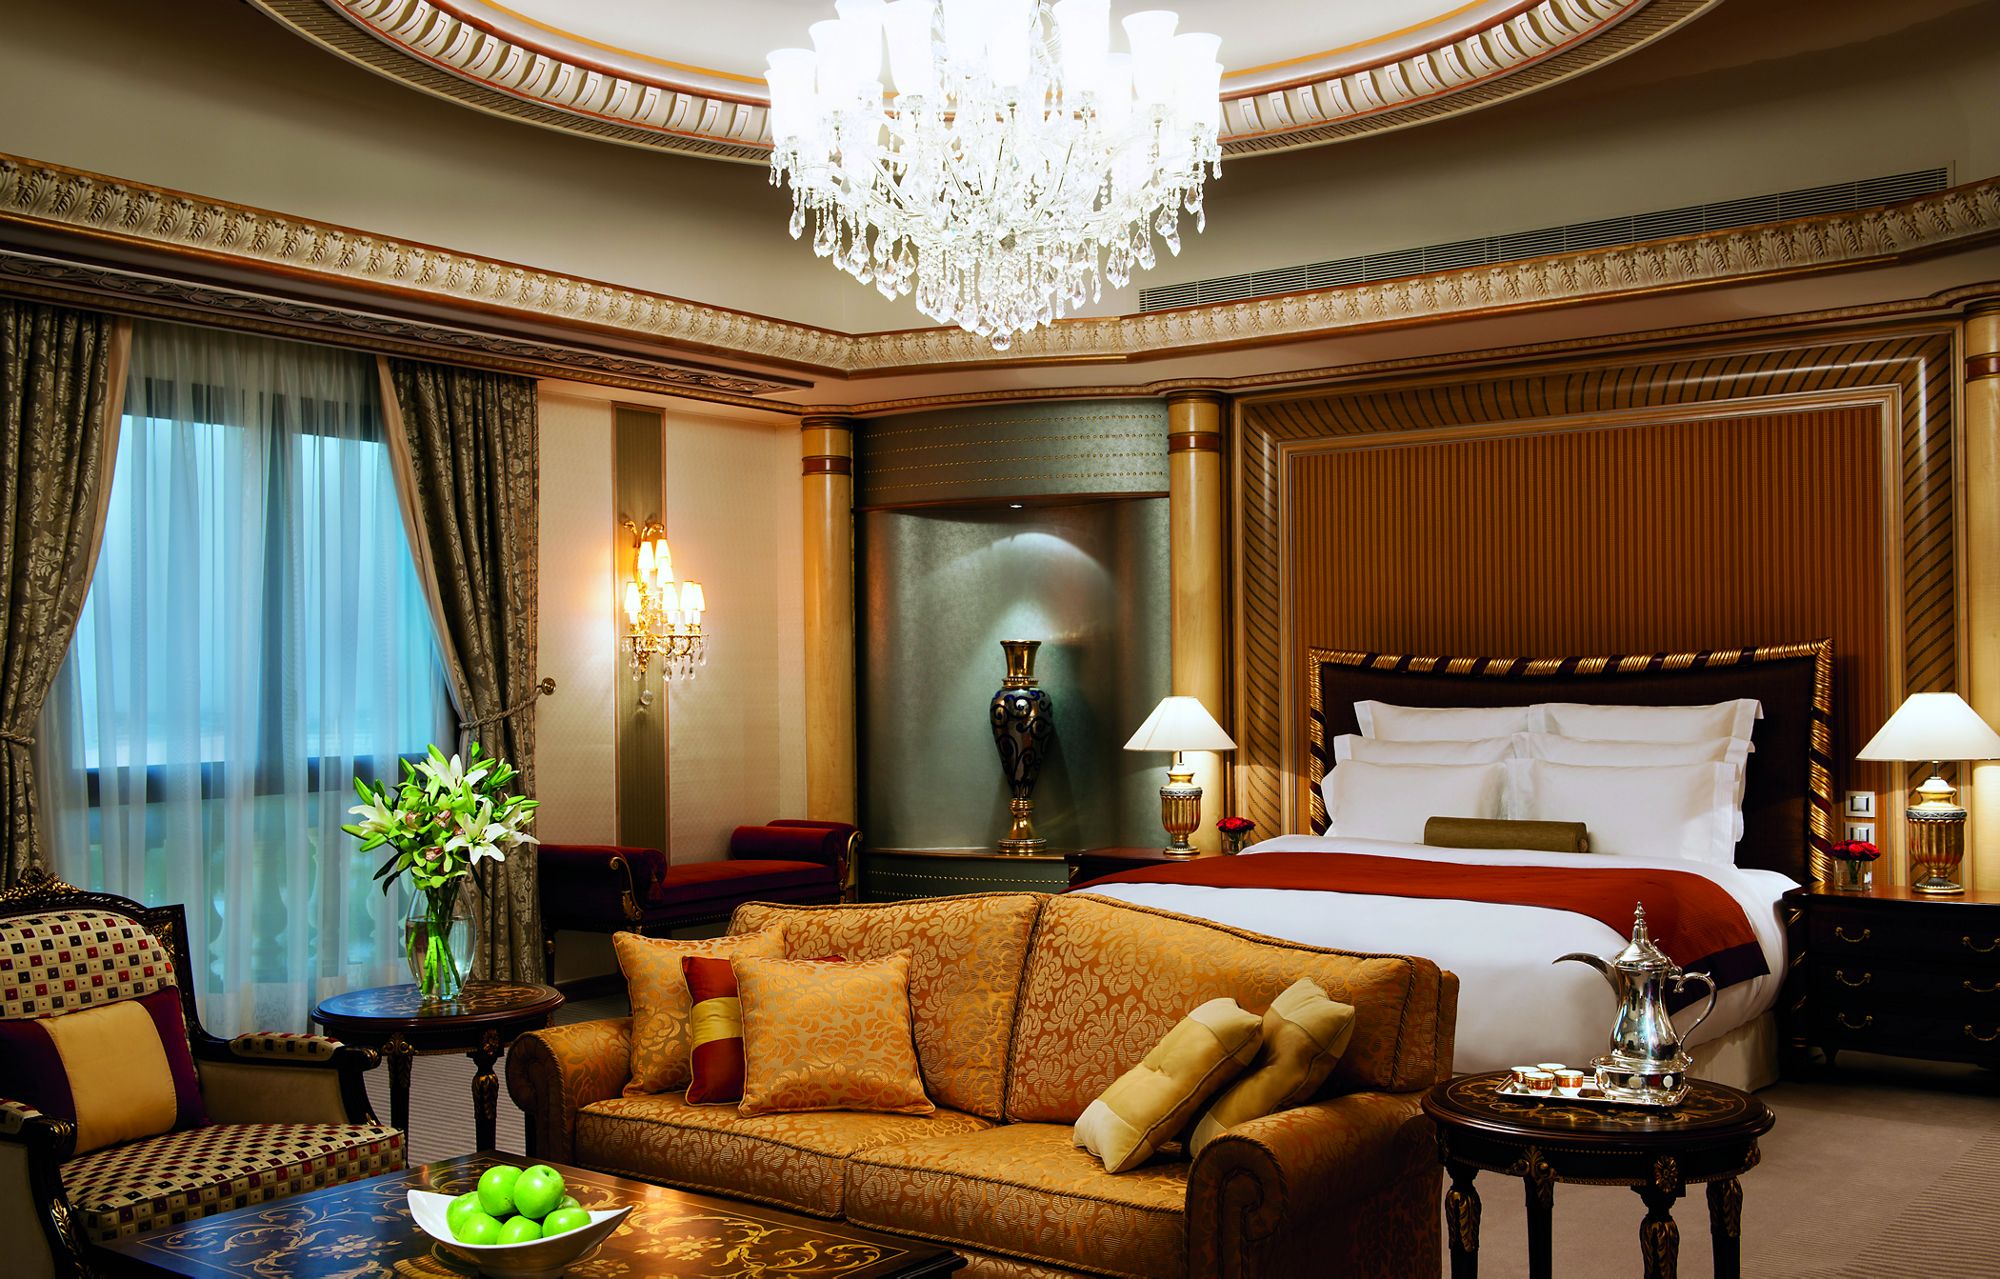 <a href="https://www.tripadvisor.ru/Hotel_Review-g293995-d2366709-Reviews-The_Ritz_Carlton_Riyadh-Riyadh_Riyadh_Province.html">Рейтинг отеля</a> на сайте TripAdvisor &mdash; 4,5 звезды из пяти возможных. В пятизвездочном отеле для некурящих есть собственный бассейн, пляж, несколько ресторанов и спа-комплекс.